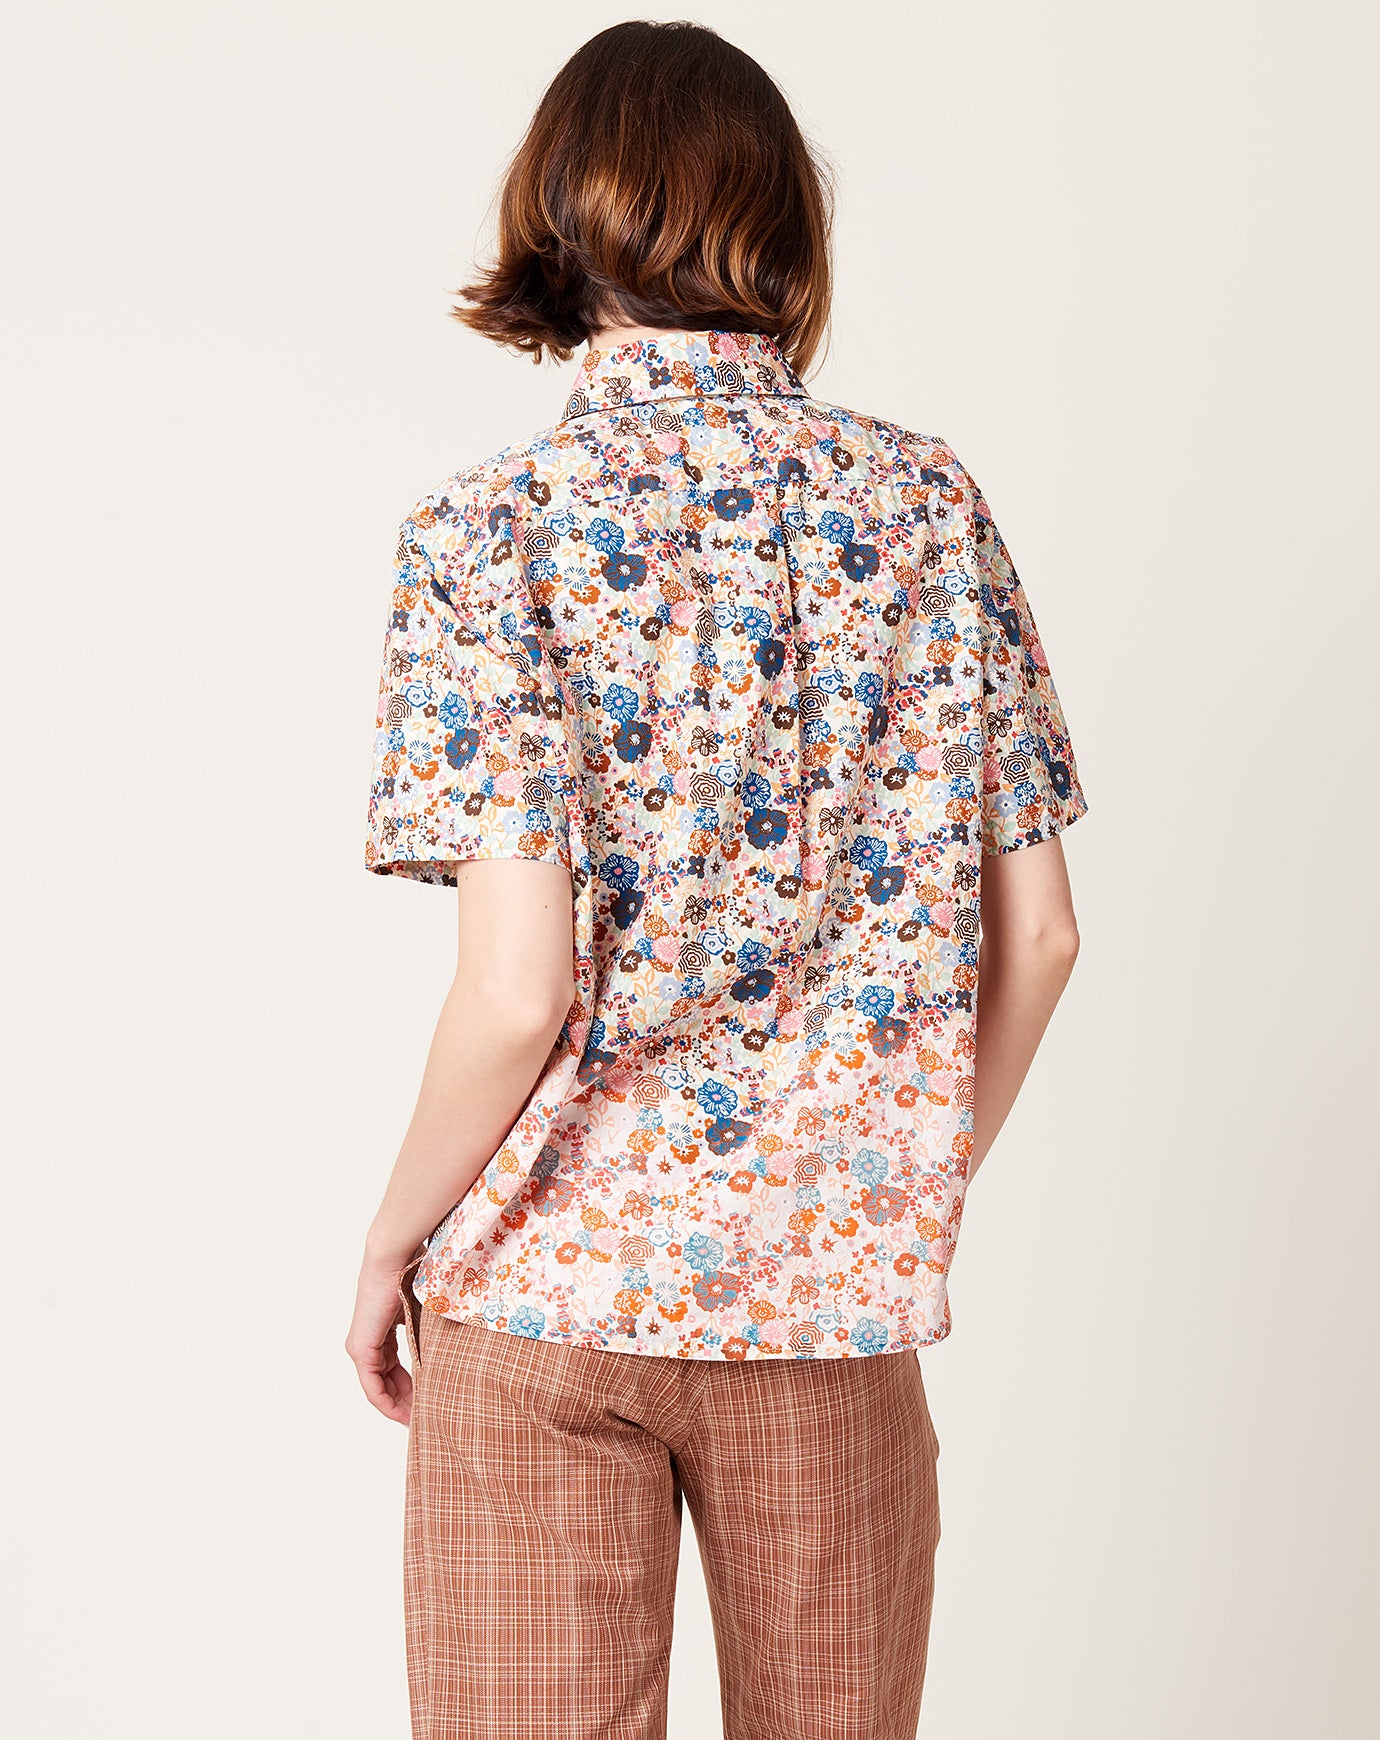 Caron Callahan April Shirt in Multi Floral Poplin